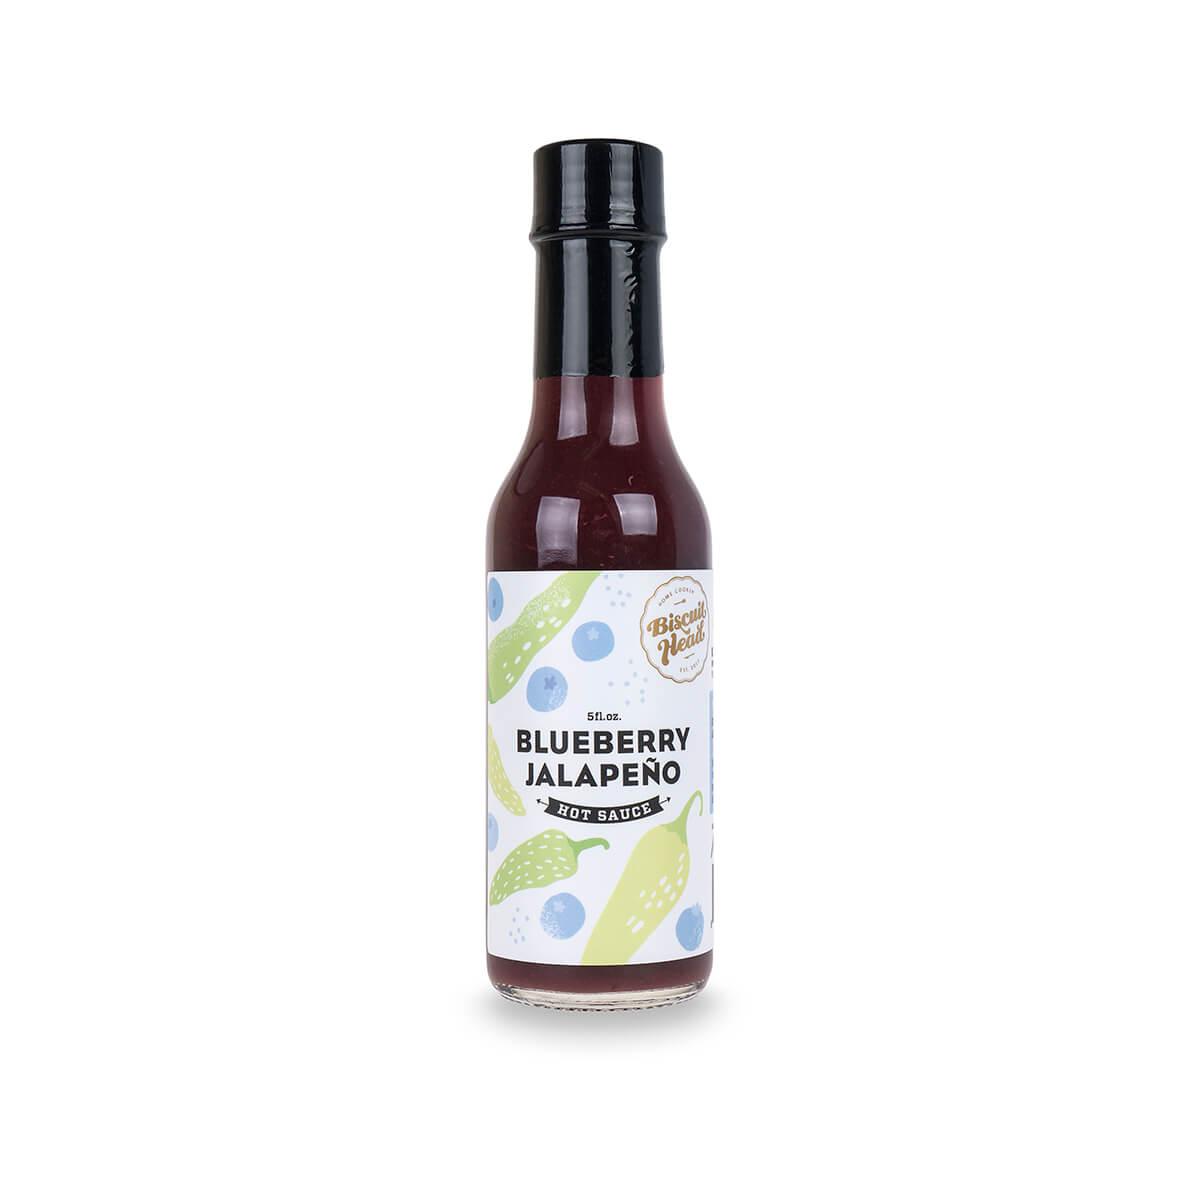  Blueberry Jalapeno Hot Sauce